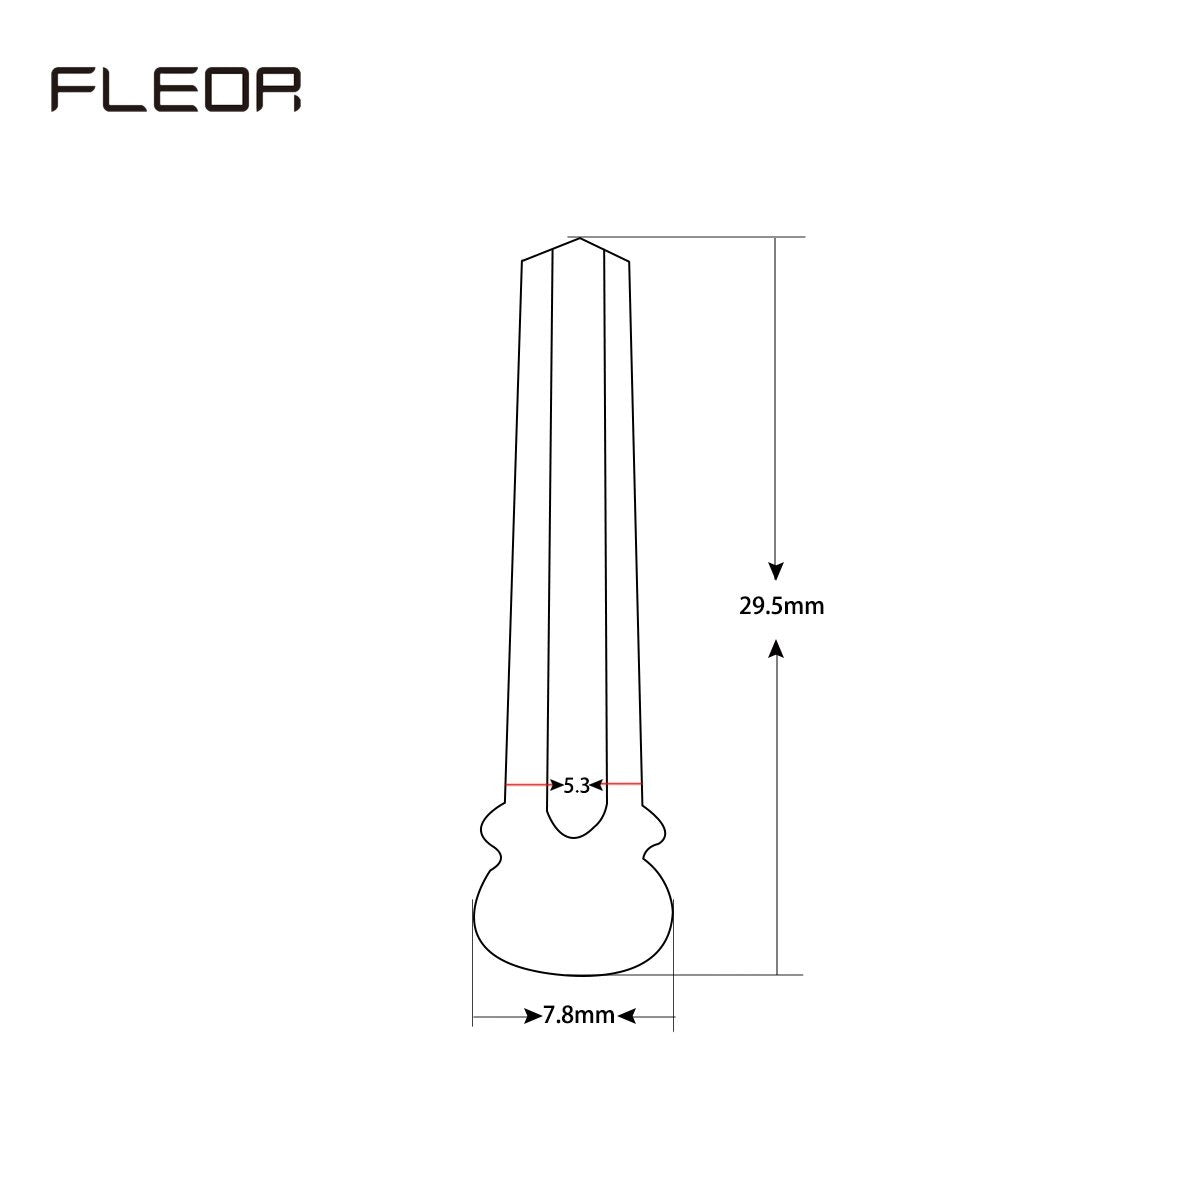 FLEOR 6PCS Brass Guitar Bridge Pins for Acoustic Guitar | iknmusic